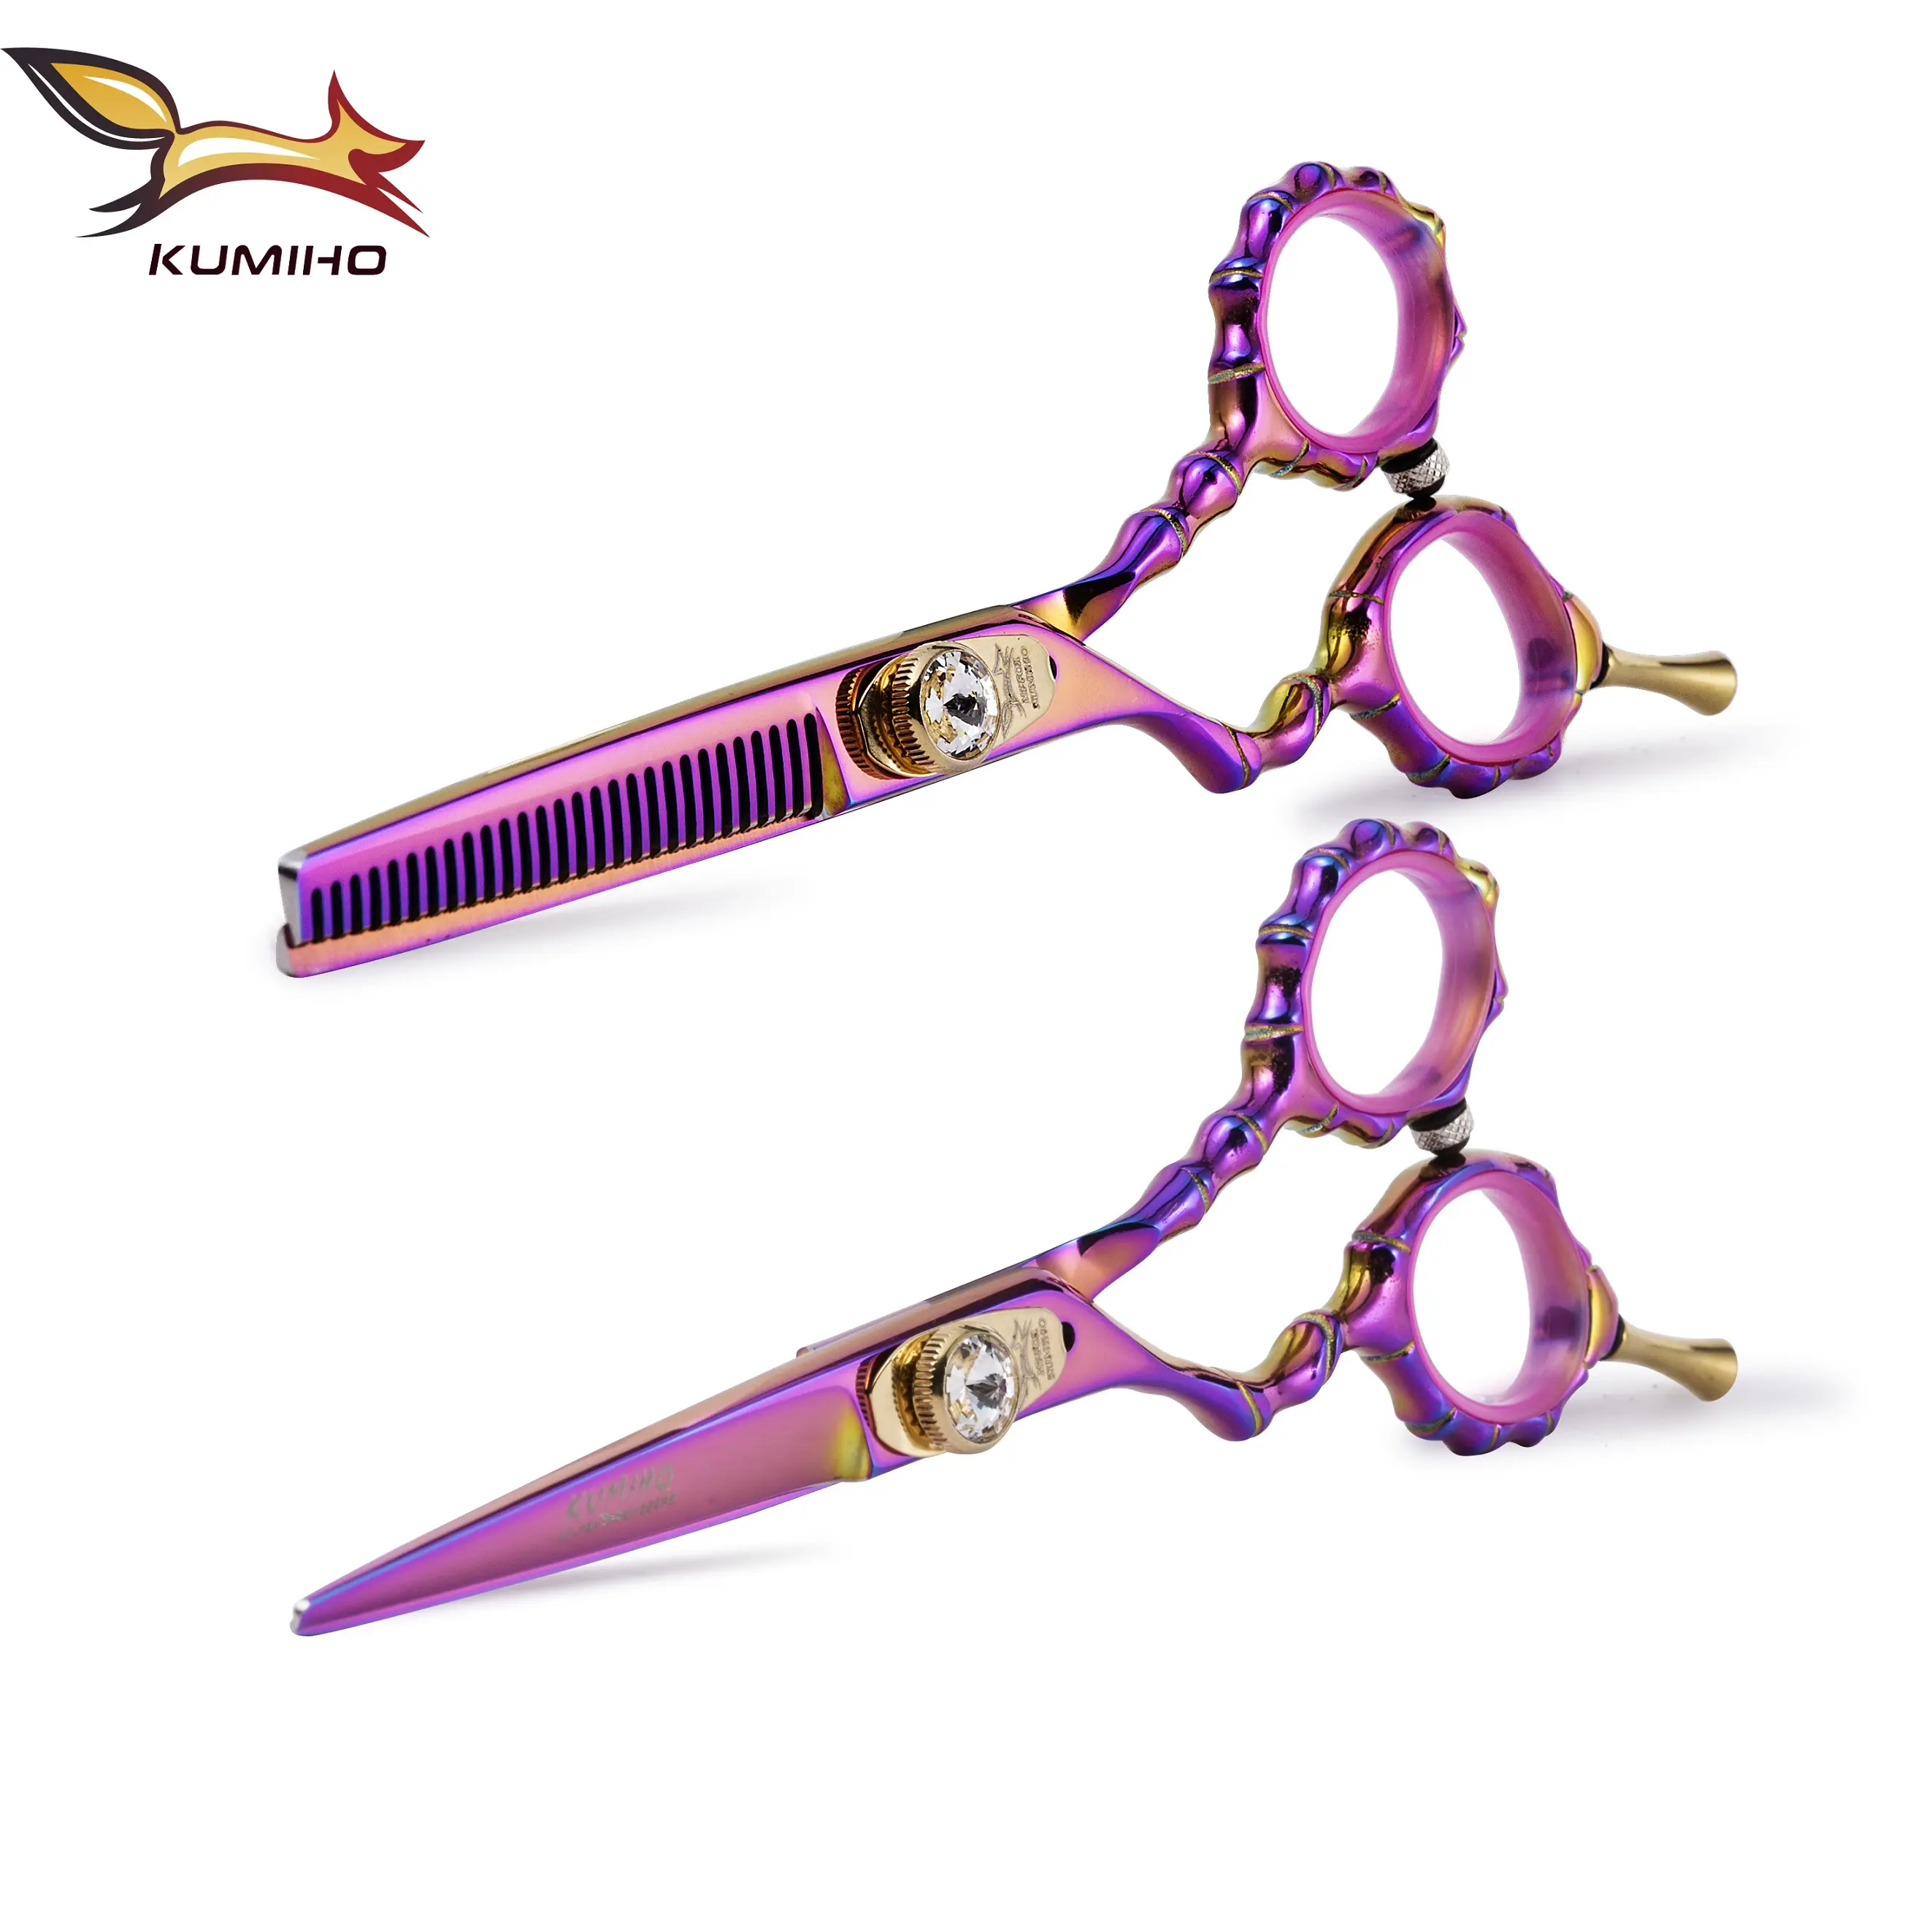 KUMIHO ZJZ-575 lefty hair cutting scissors and thinning scissors 6inch titanium coated left handed scissors